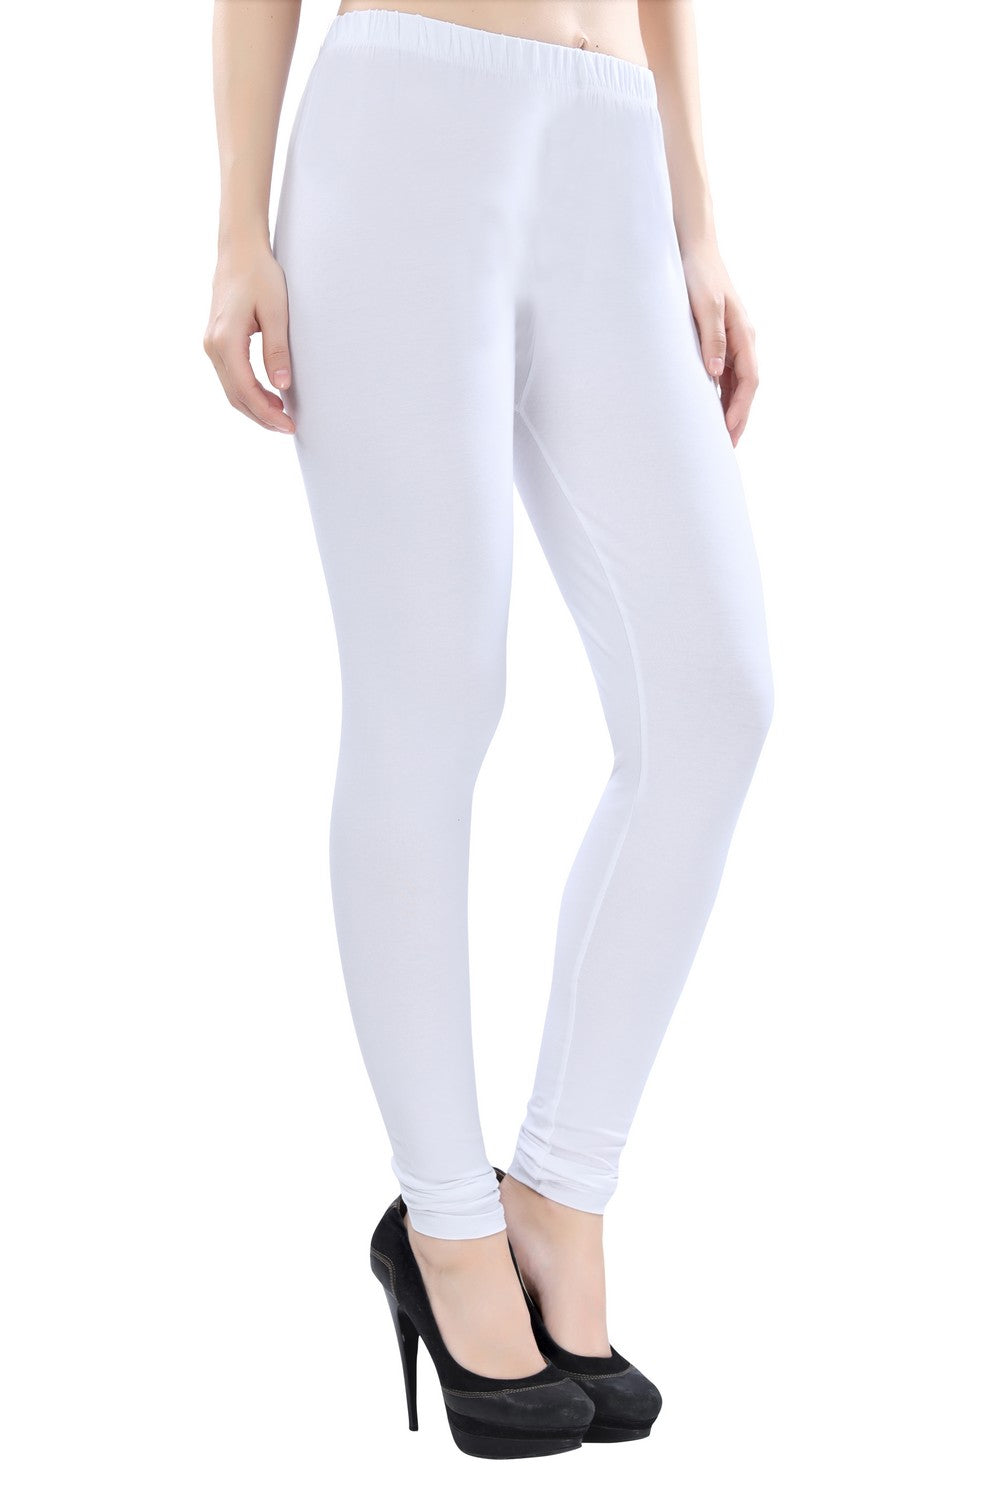 TRASA Women's Slim Fit Ultra Soft Cotton Churidar Leggings - Beige